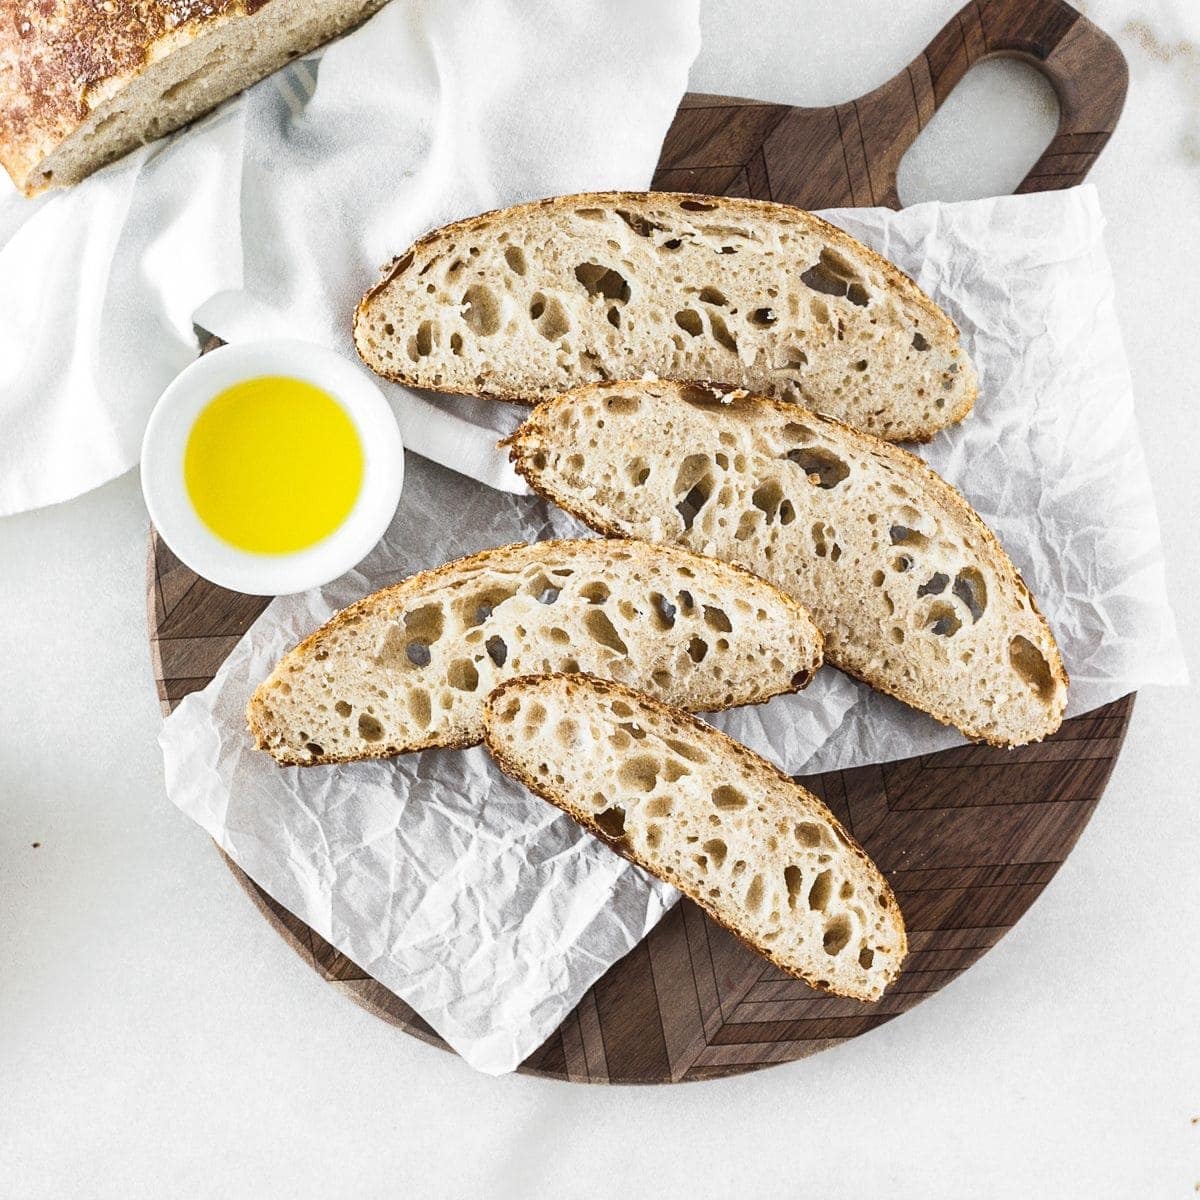 https://livelytable.com/wp-content/uploads/2016/04/homemade-sourdough-bread.jpg